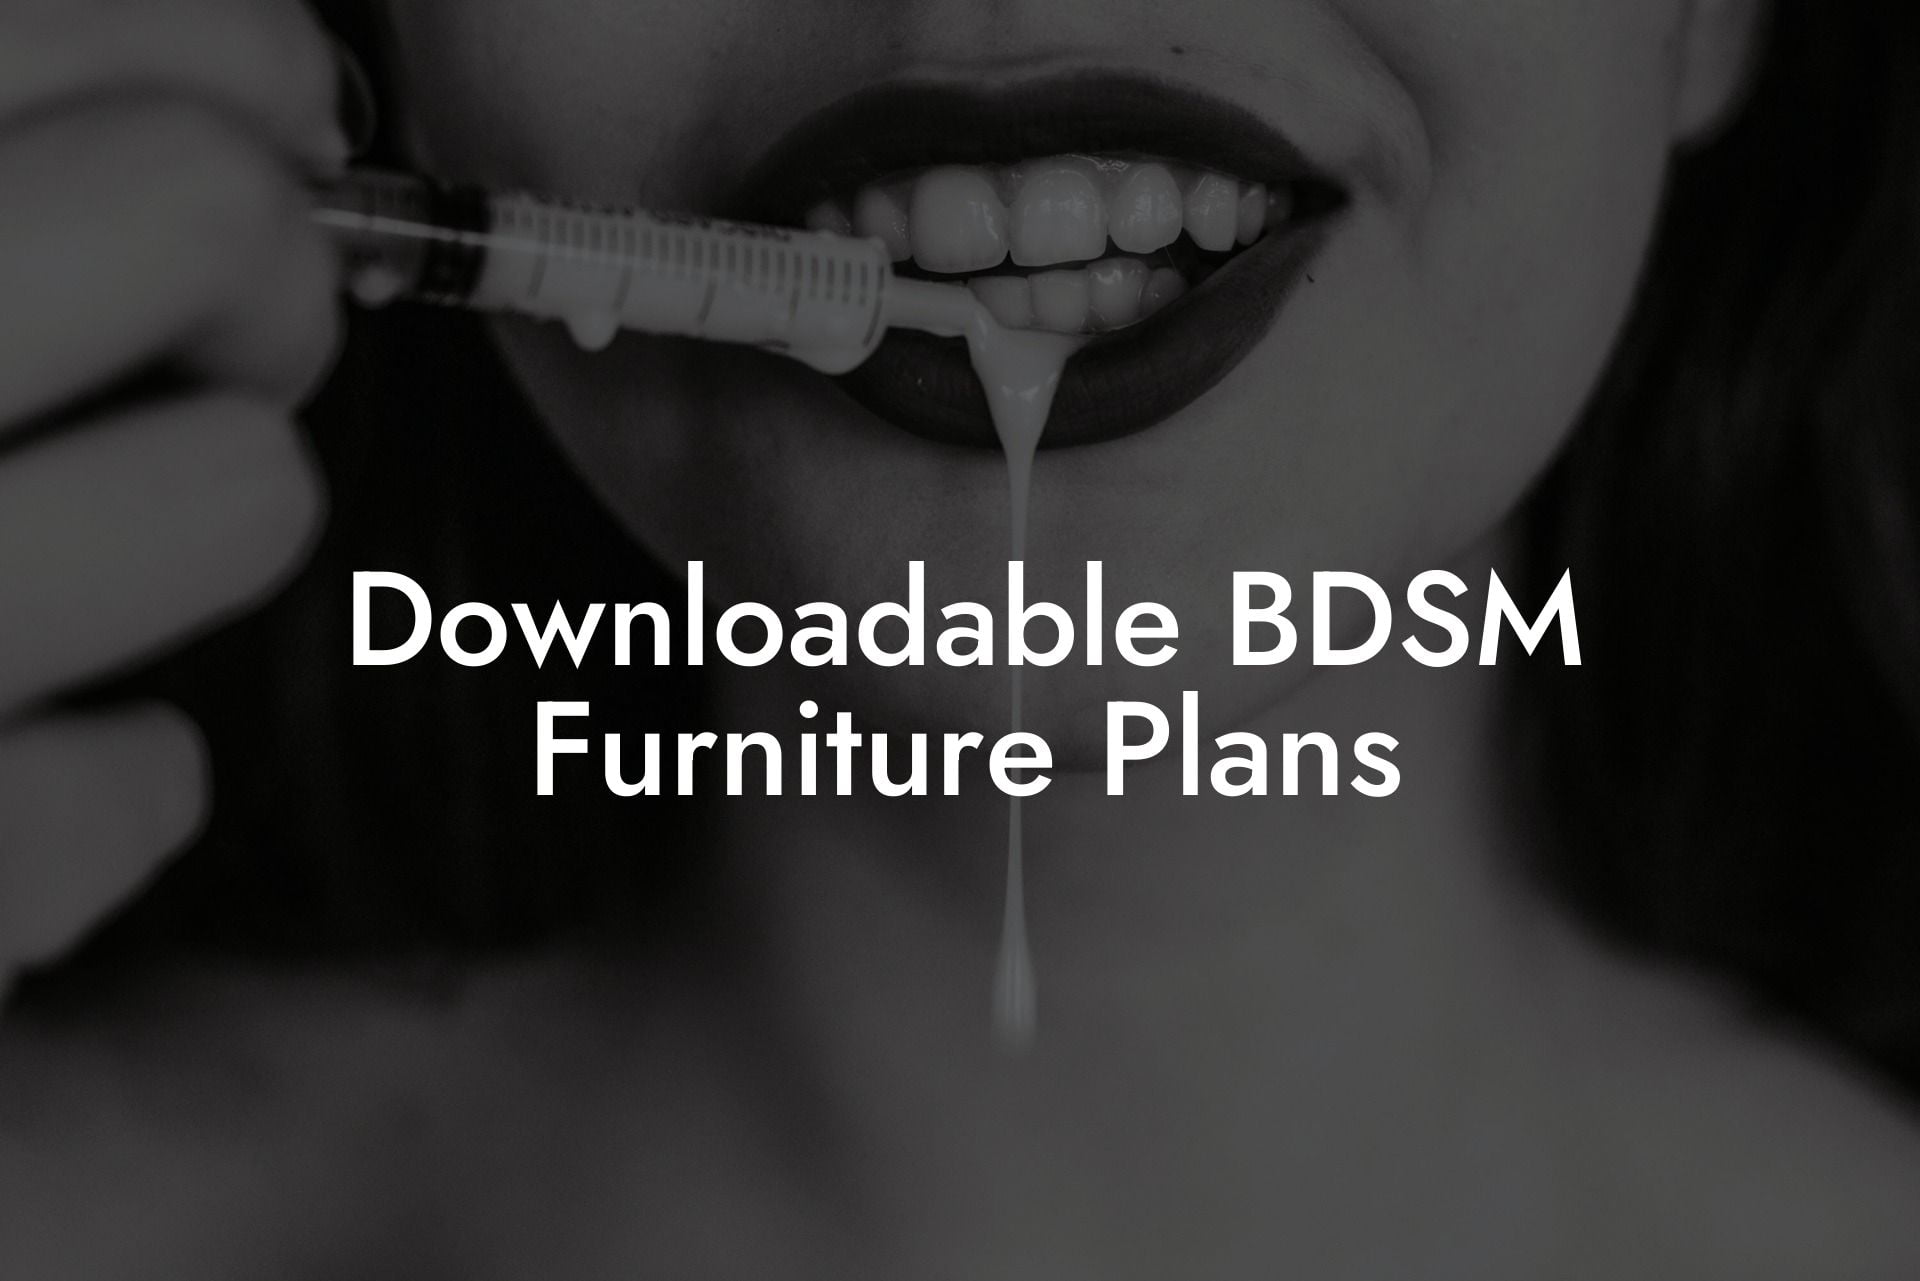 Downloadable BDSM Furniture Plans